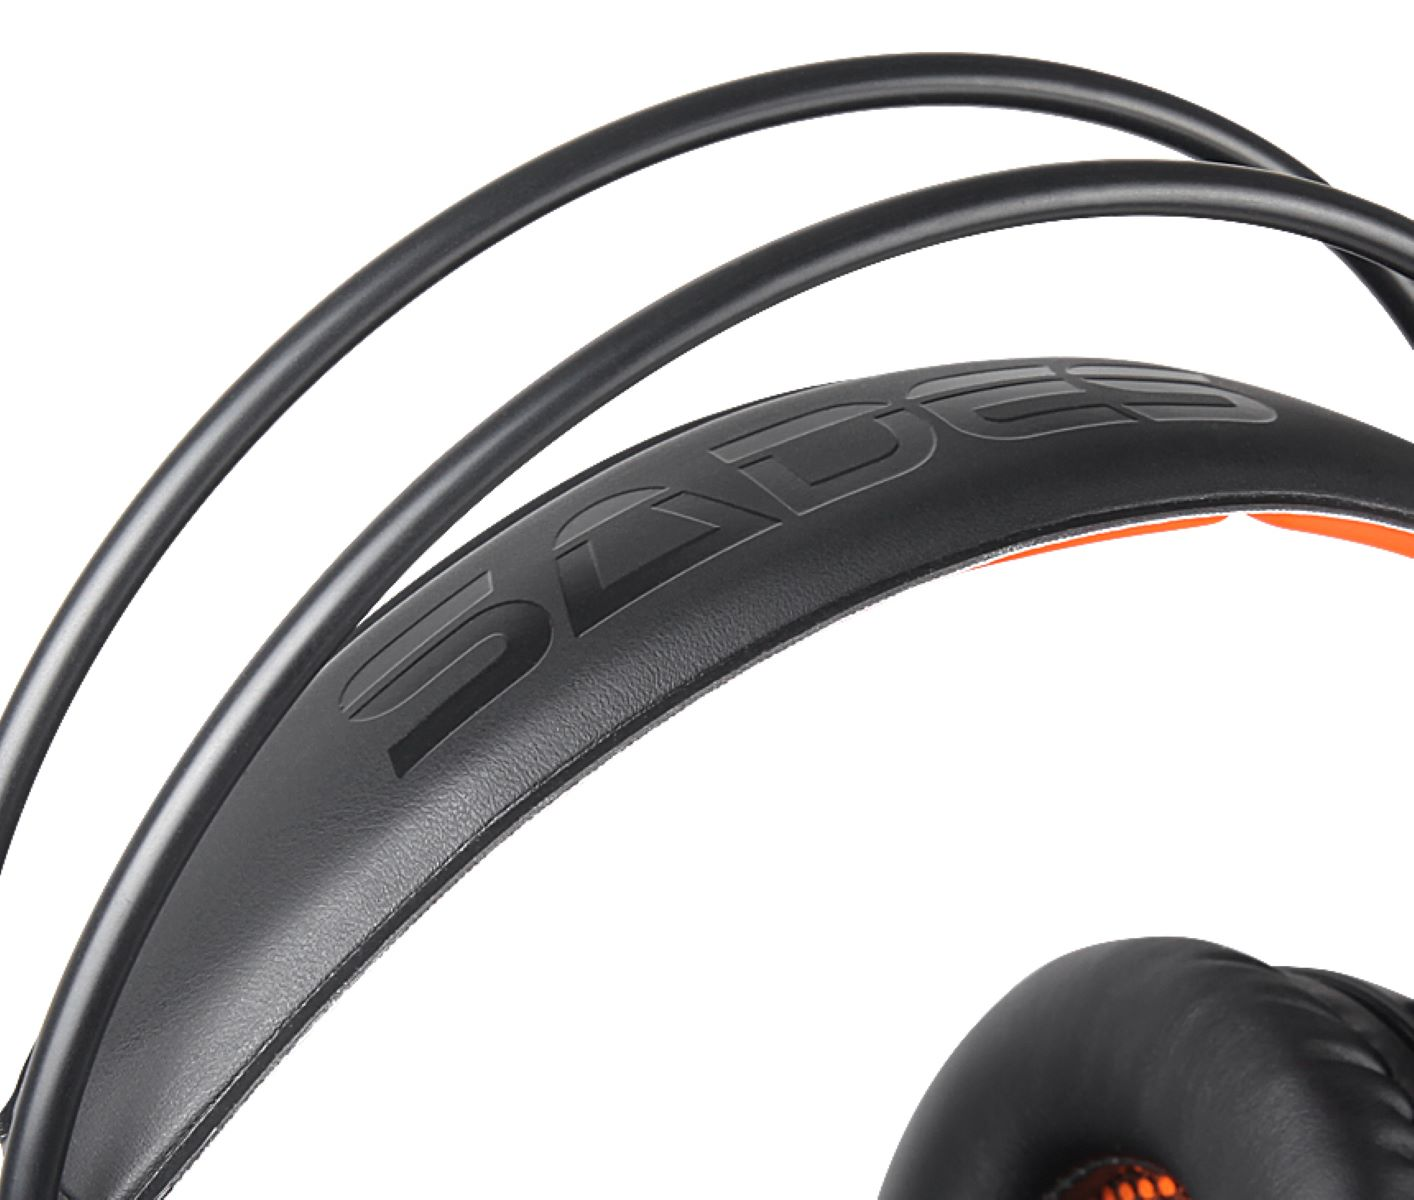 SADES A6, Over-ear Headset Gaming schwarz/orange